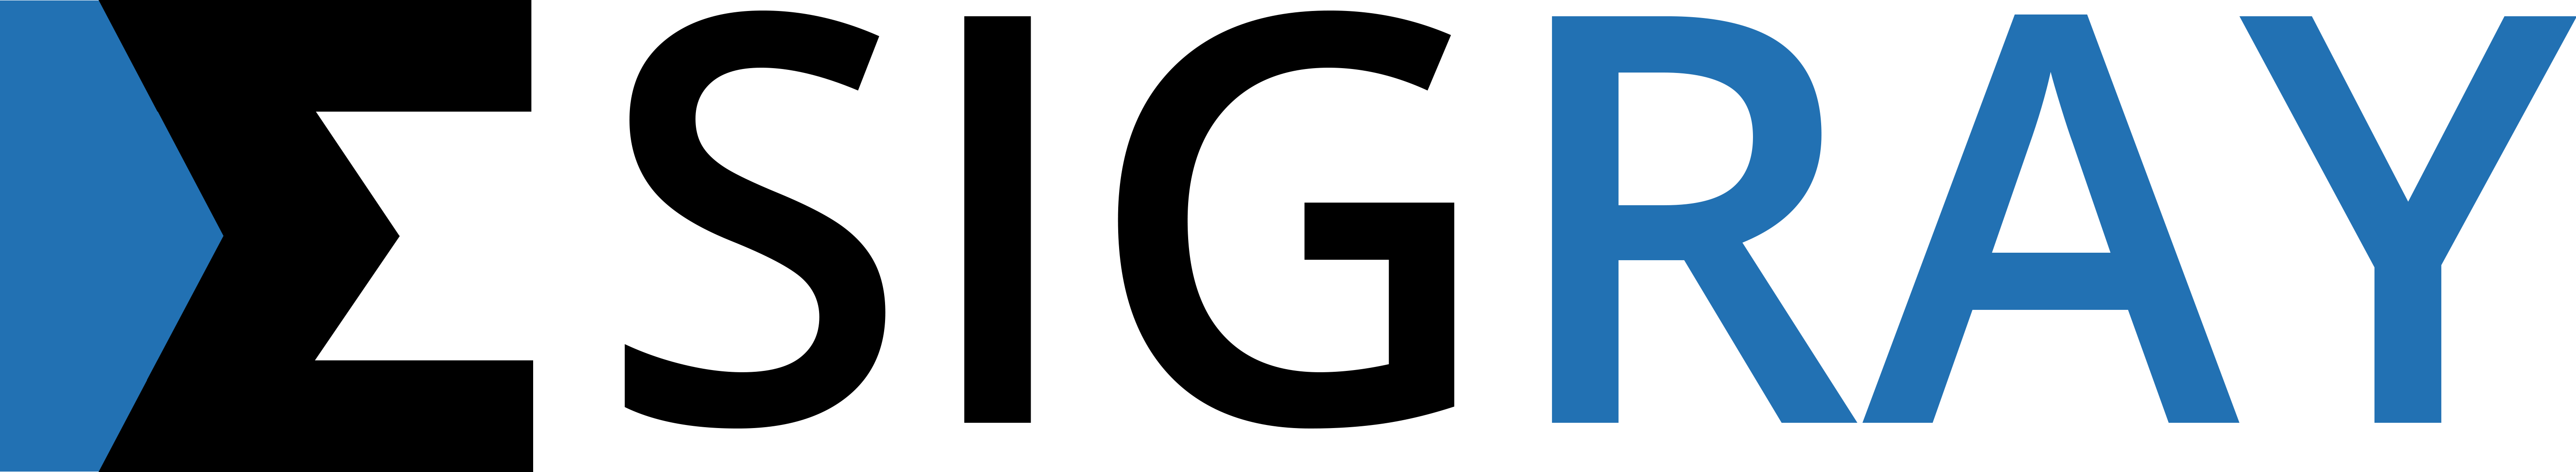 Sigray logo 2